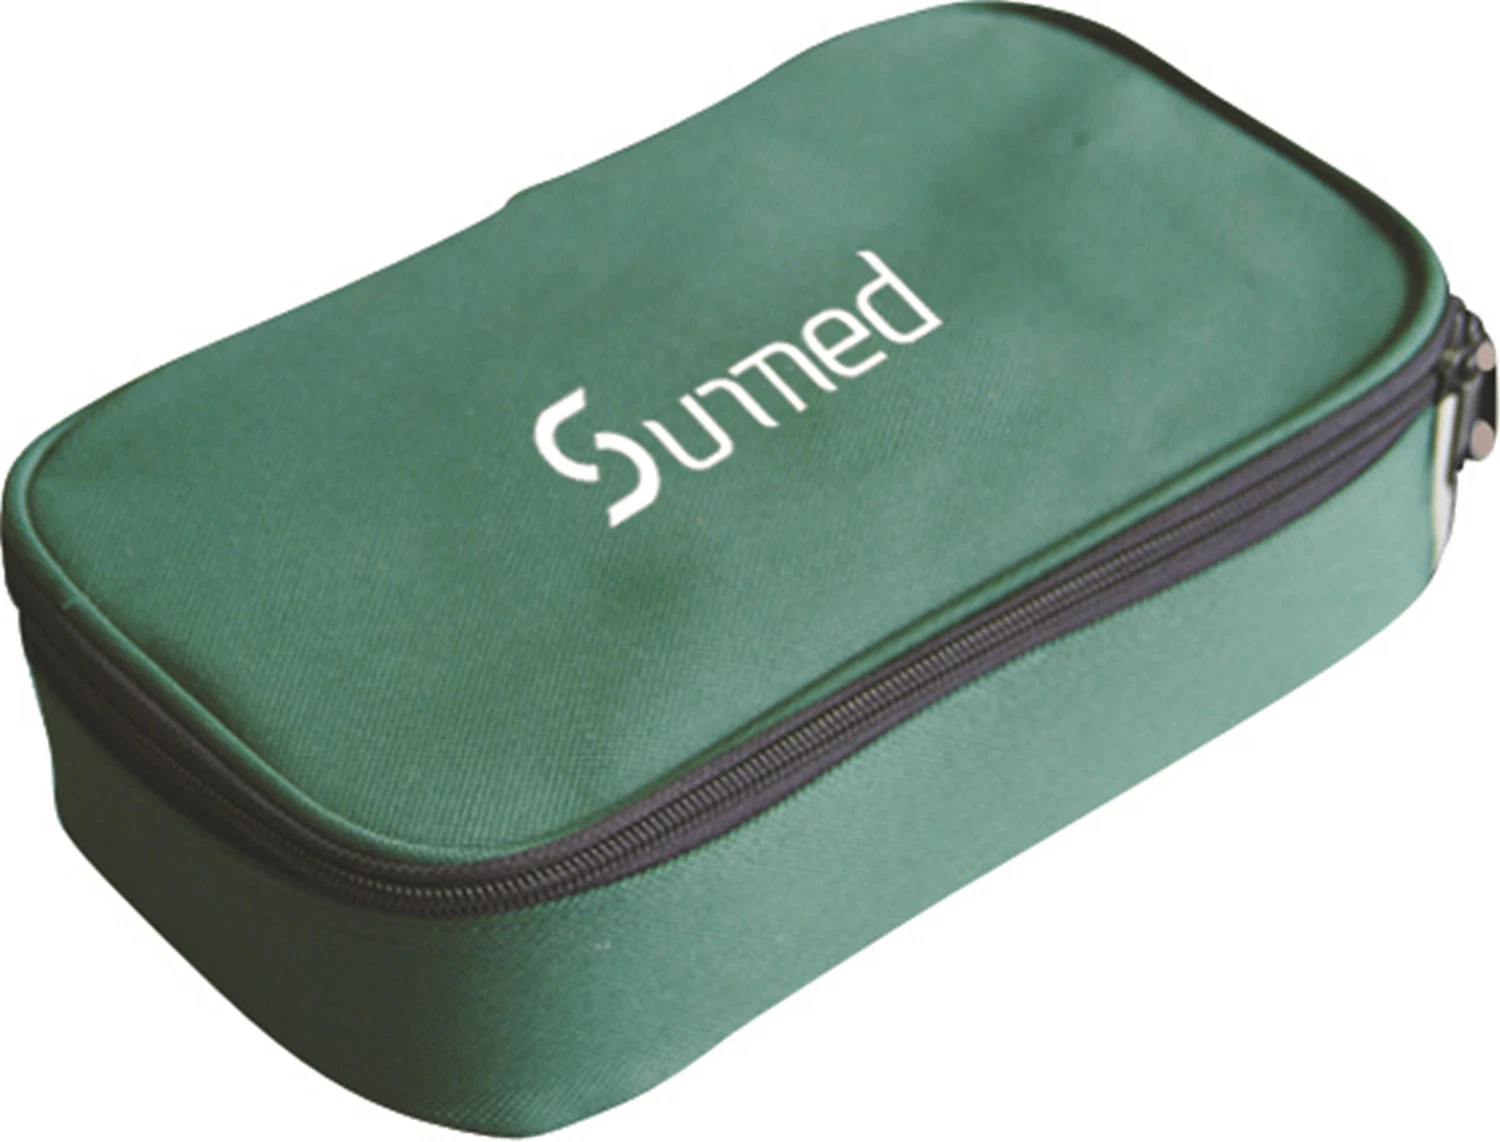 Nylon Bag for First Aid Kit Storage Bag Green